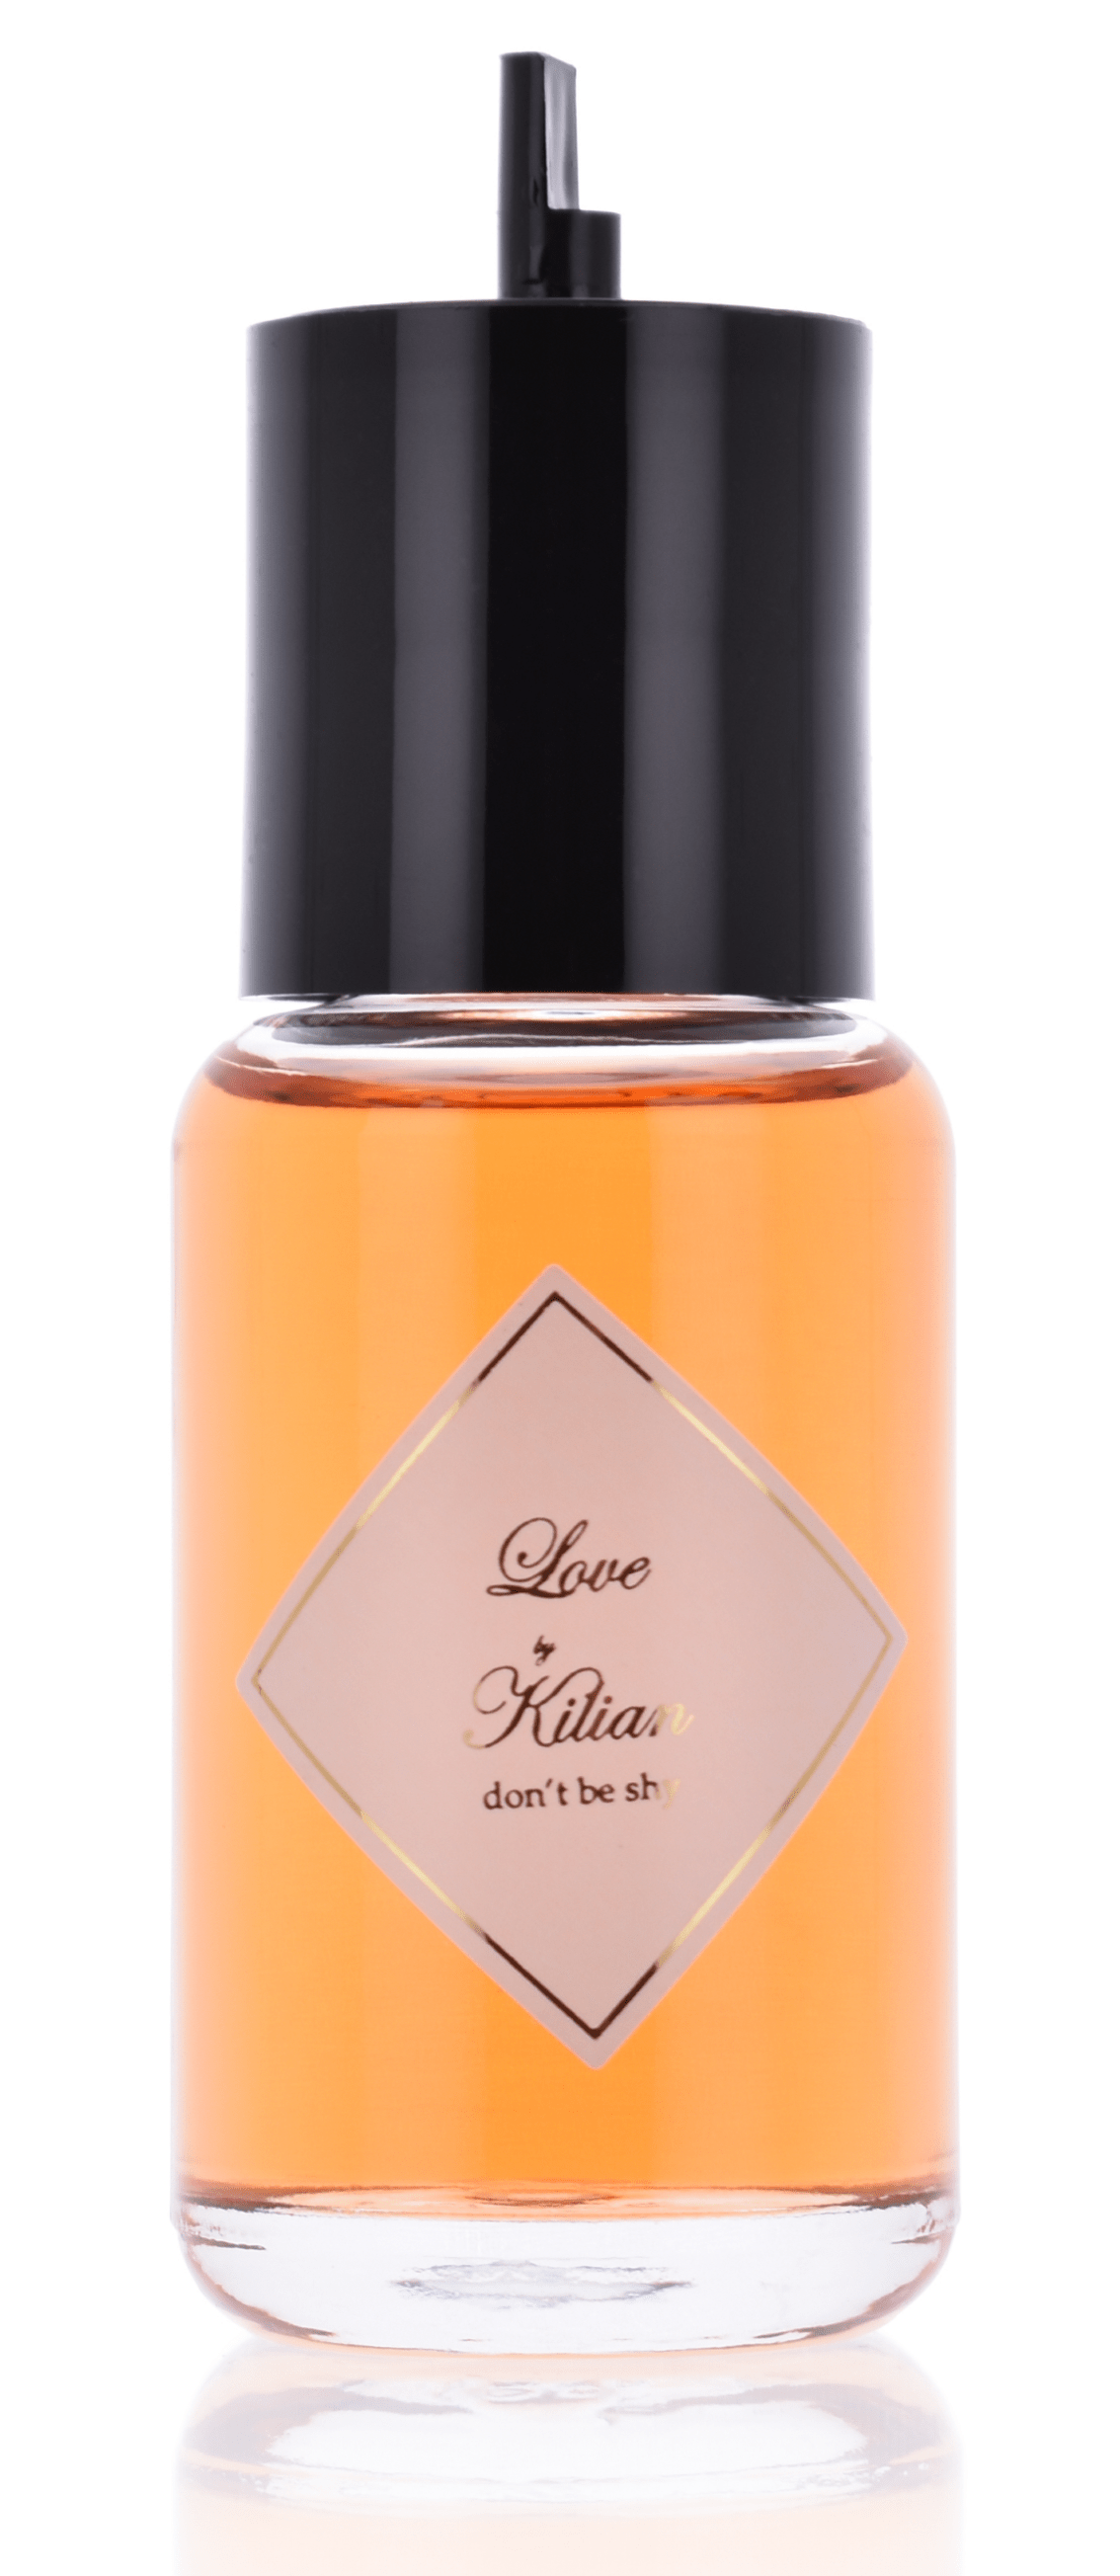 Kilian Love, don't be shy 50 ml Eau de Parfum Refill